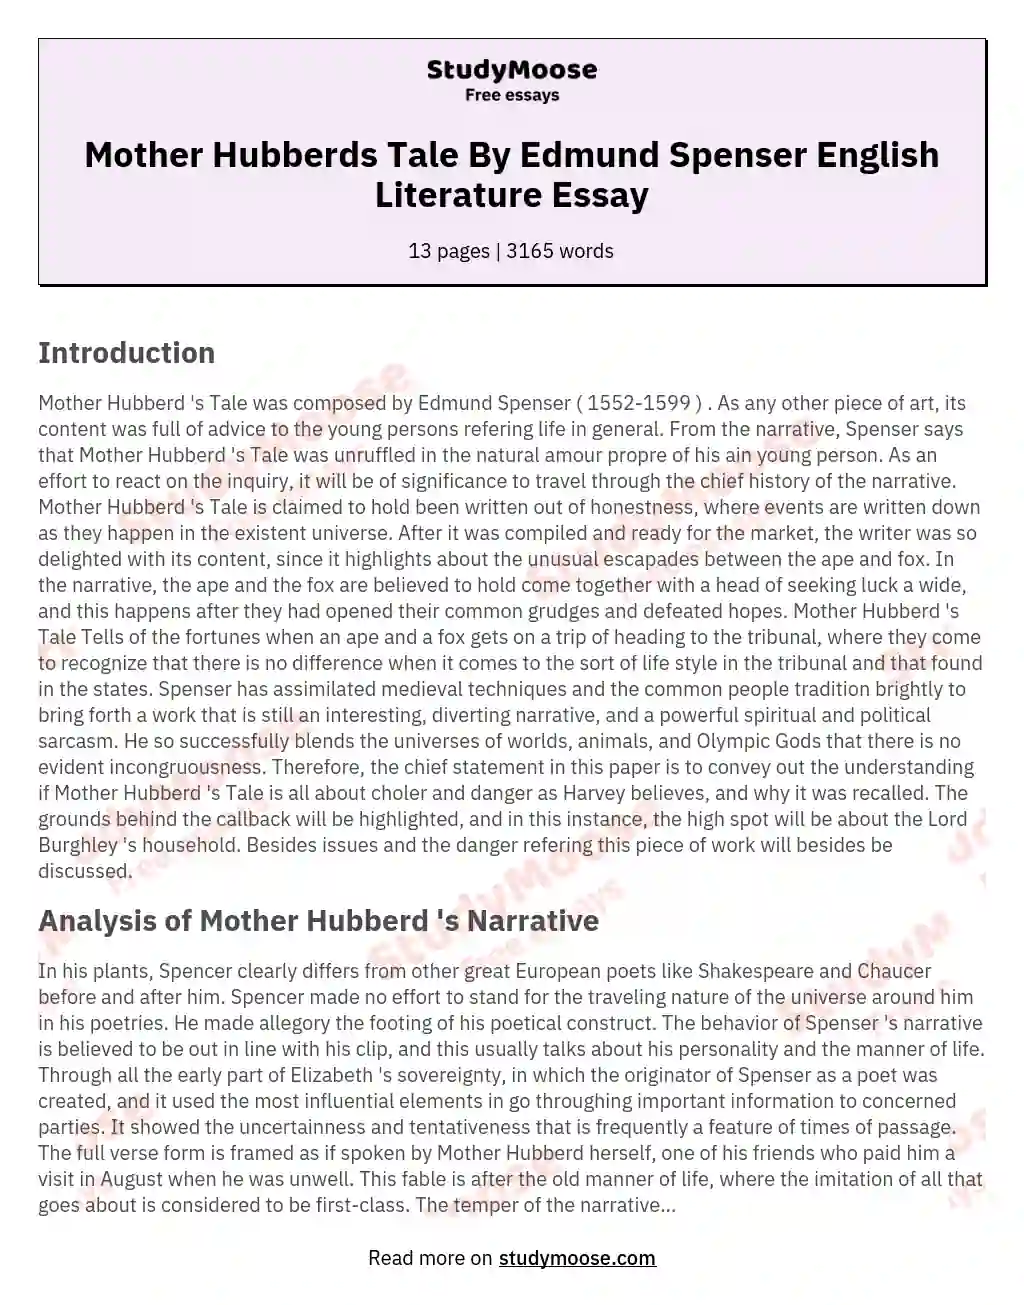 Mother Hubberds Tale By Edmund Spenser English Literature Essay essay